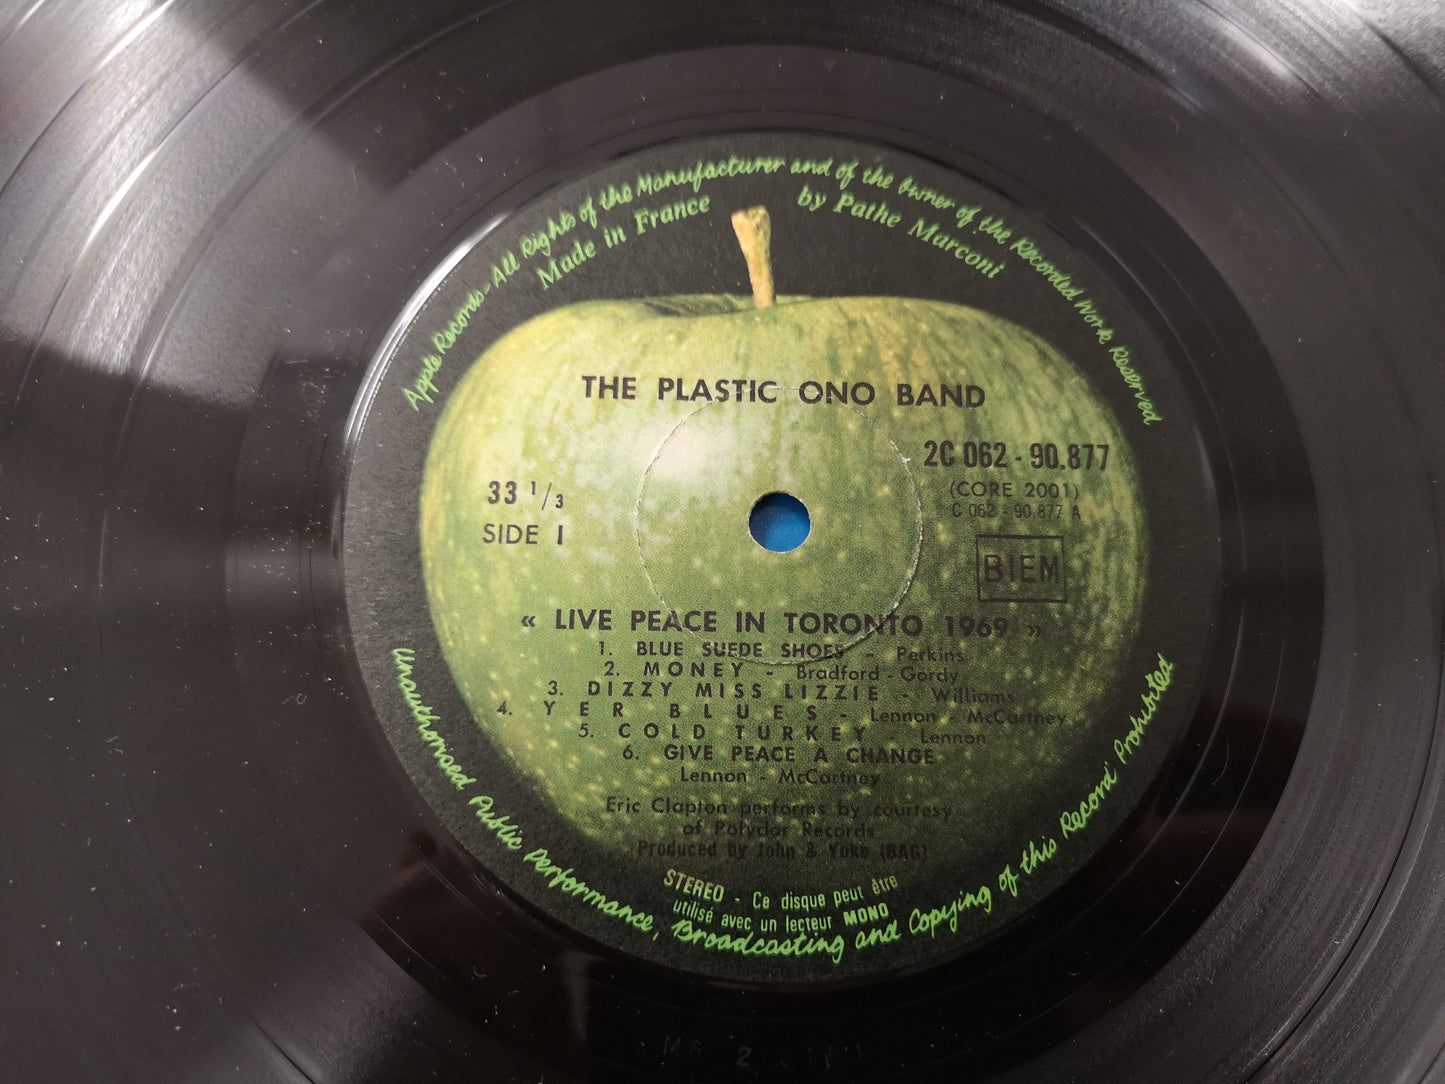 Plastic Ono Band (John Lennon) "Live Peace in Toronto 1969" Orig France 1969 EX/EX